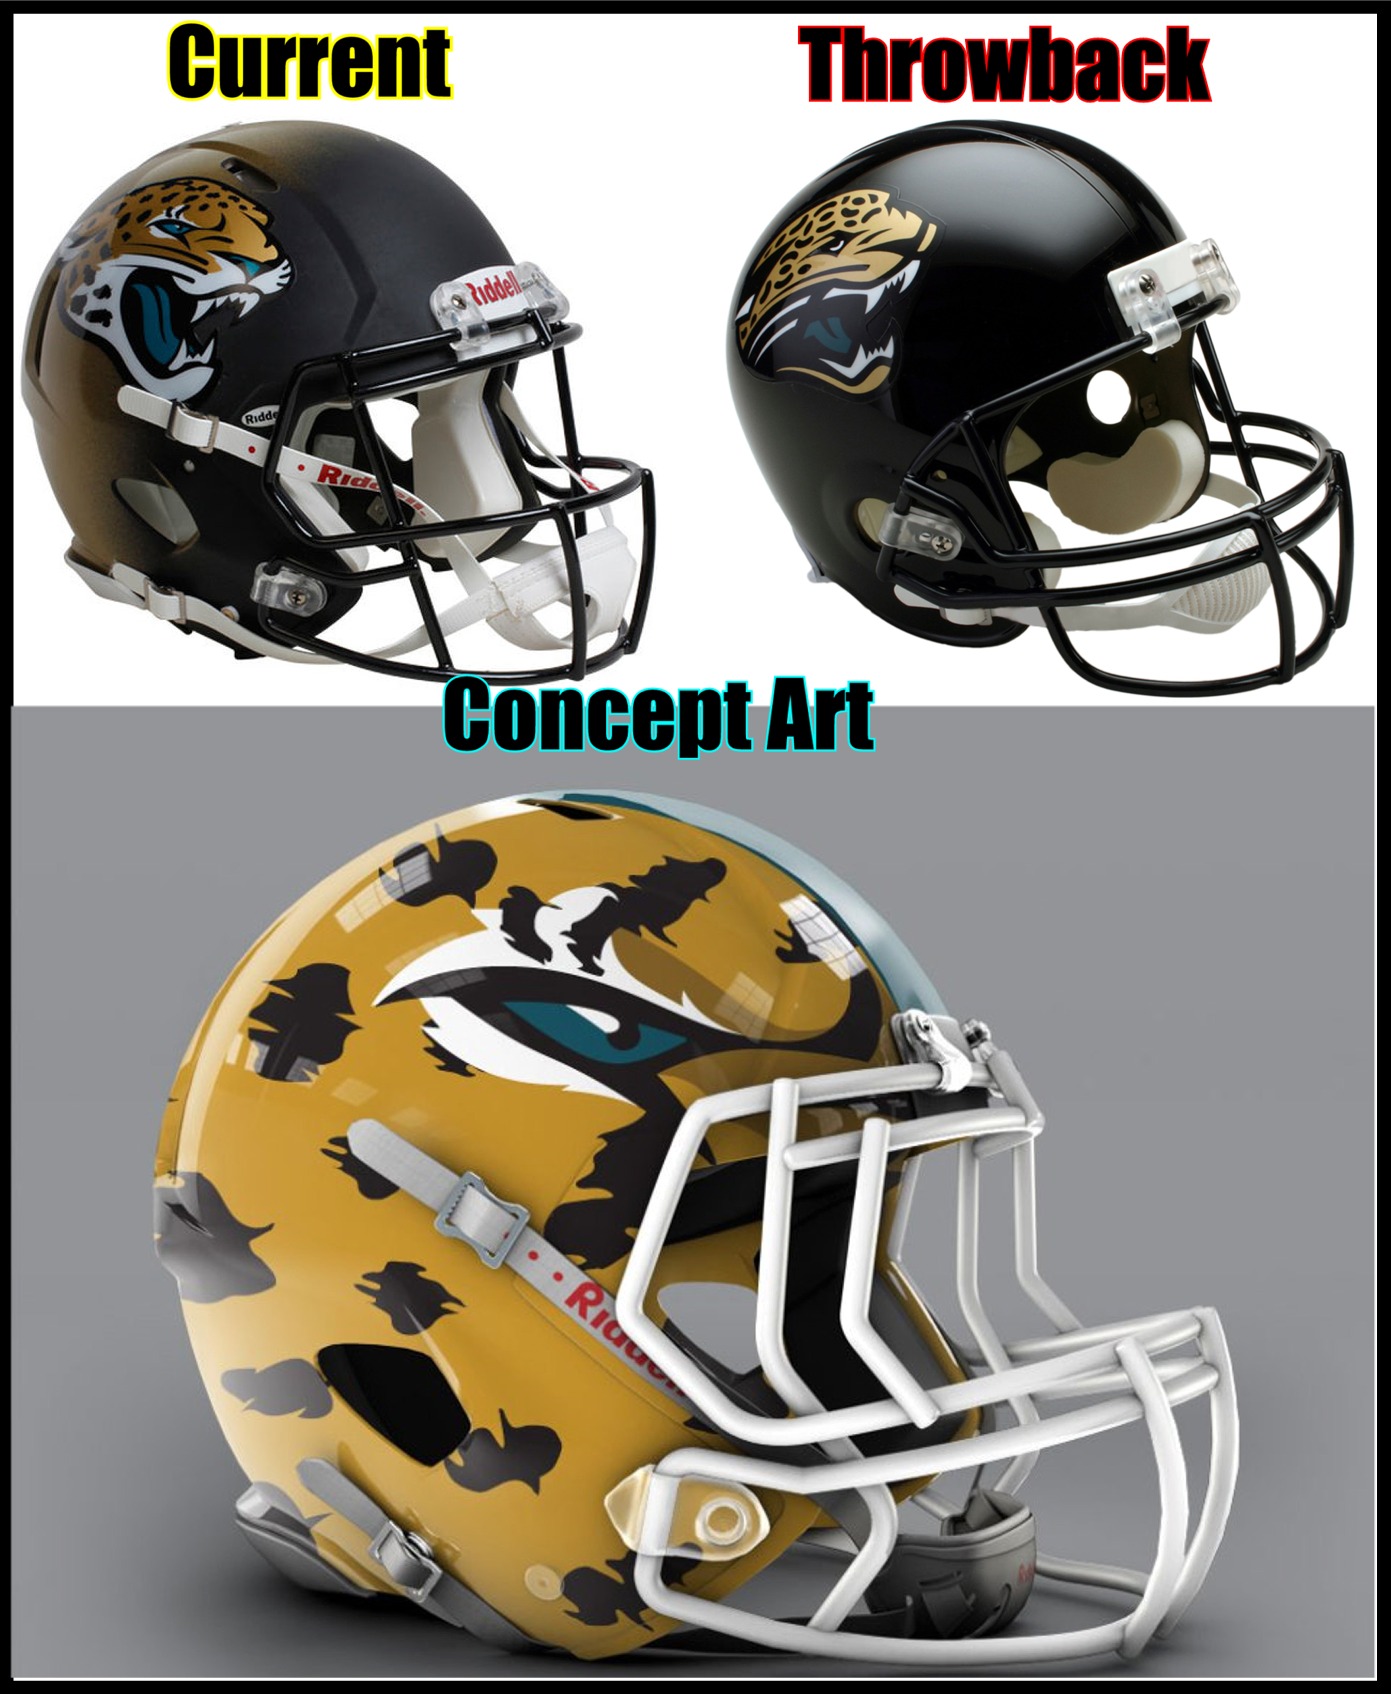 NFL Concept Helmet Designs By Paul Bunyan